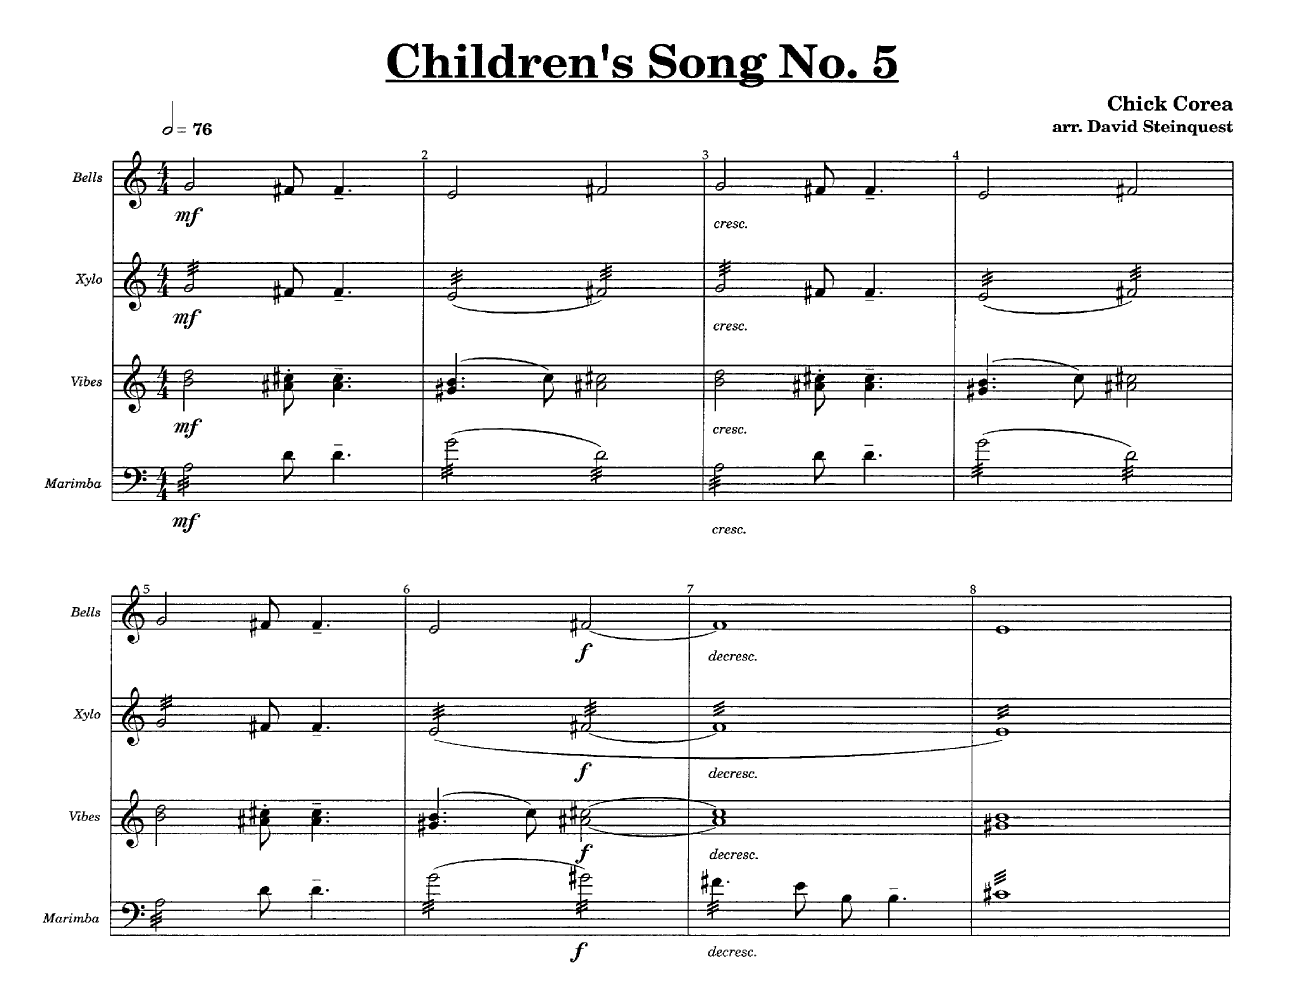 CHICK COREA CHILDRENS SONGS #3 PERC